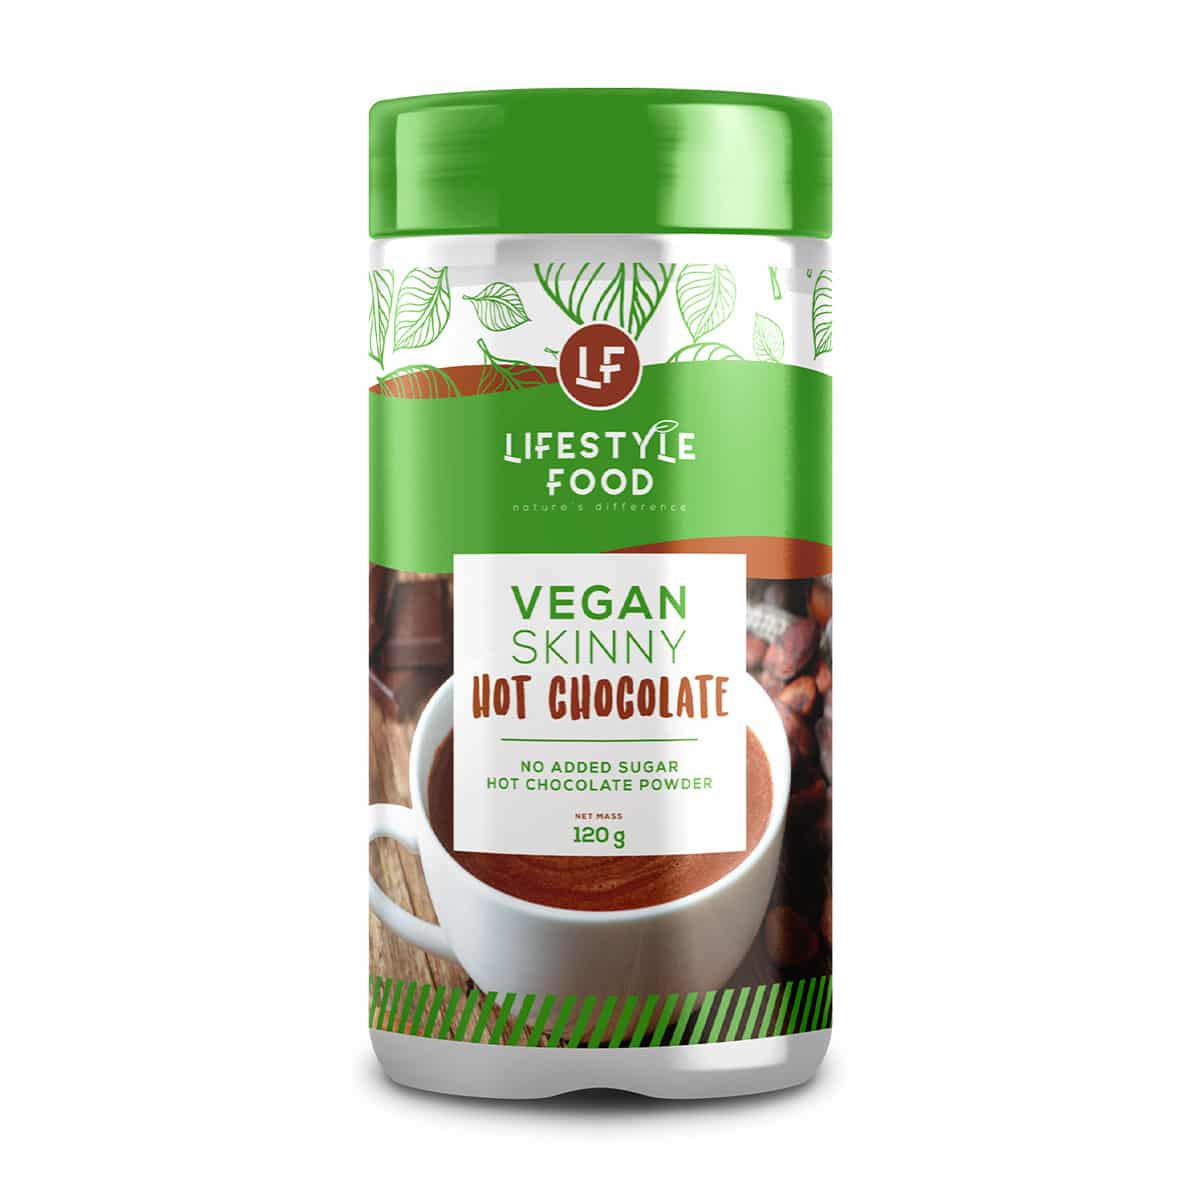 Lifestyle Food Vegan Skinny Hot Chocolate - 120g